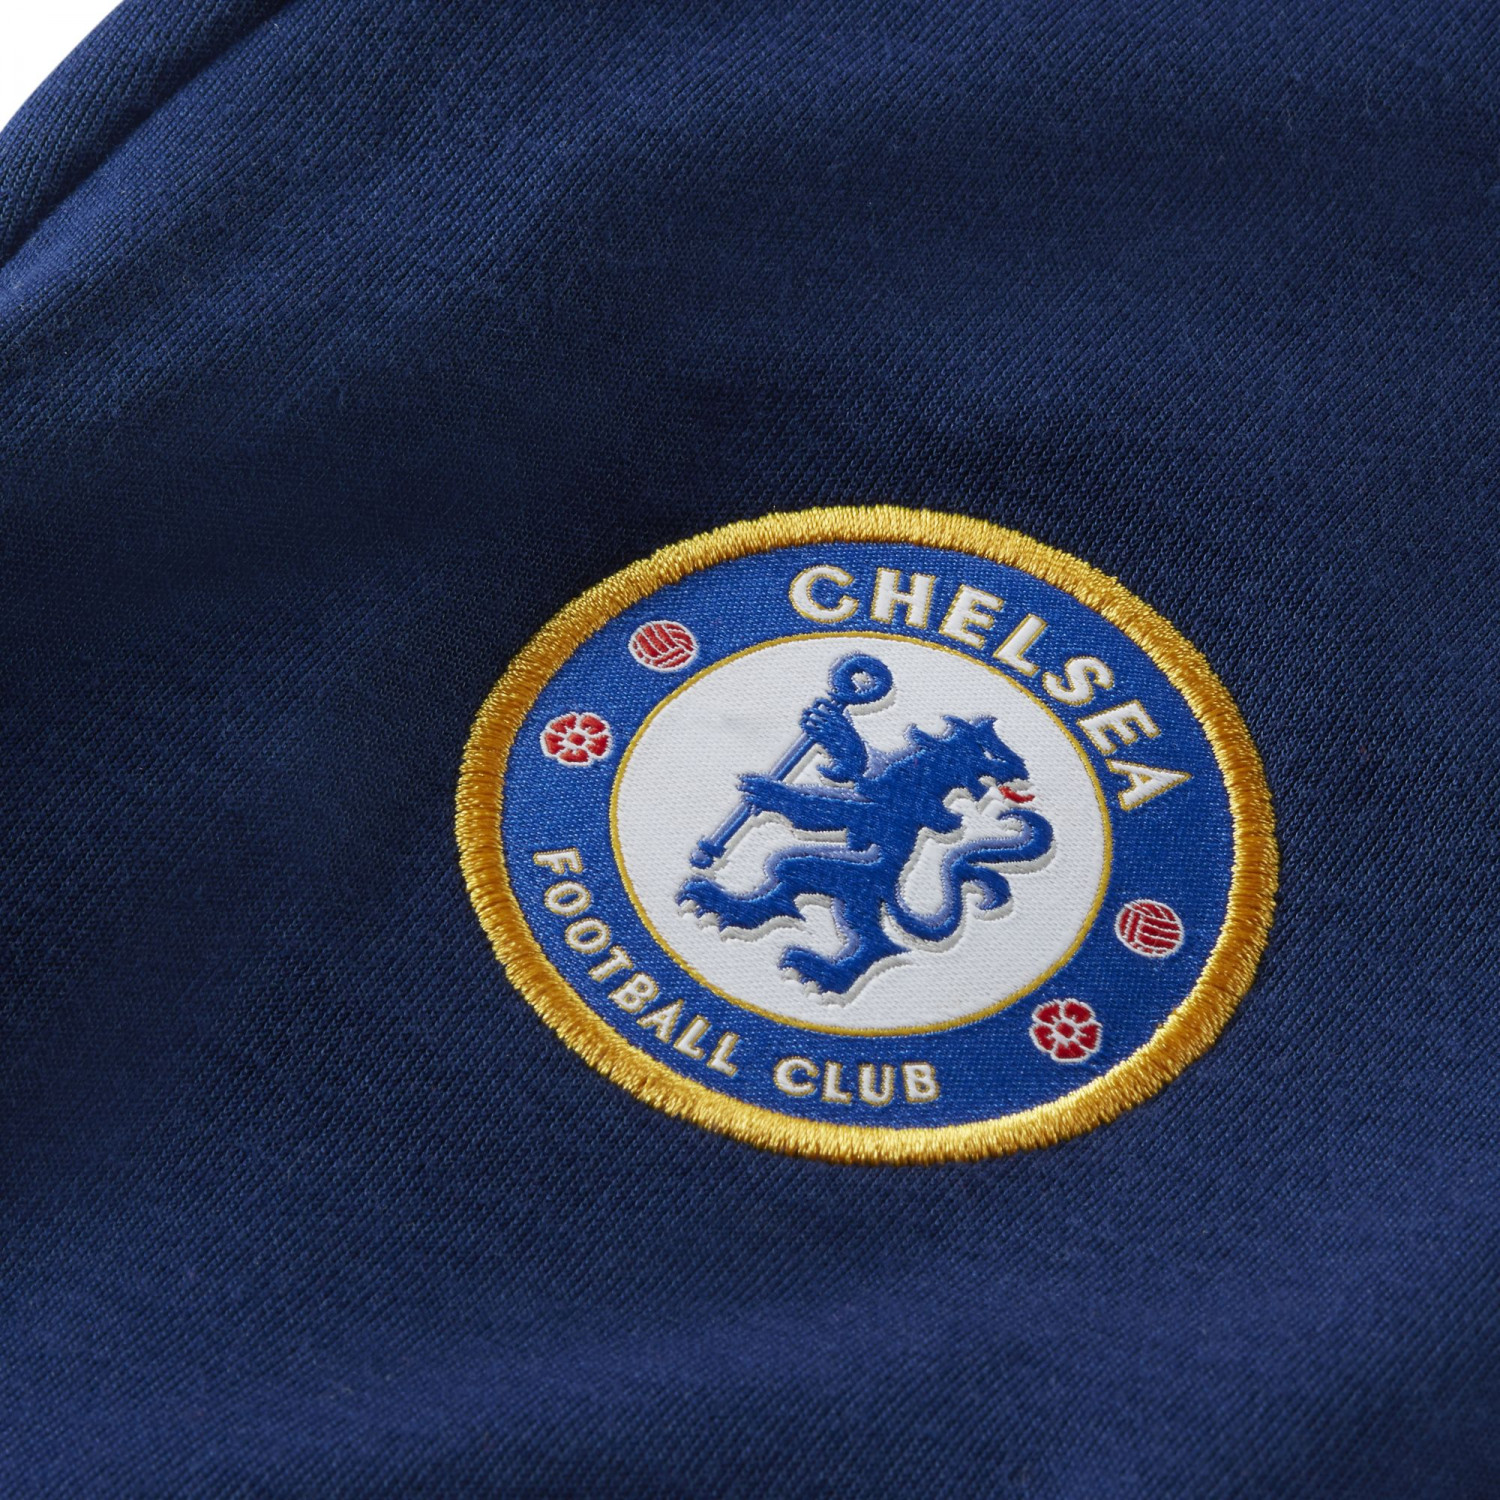 Chelsea FC Officiel Homme Poly Piste Pantalon-Bleu marine-Neuf 